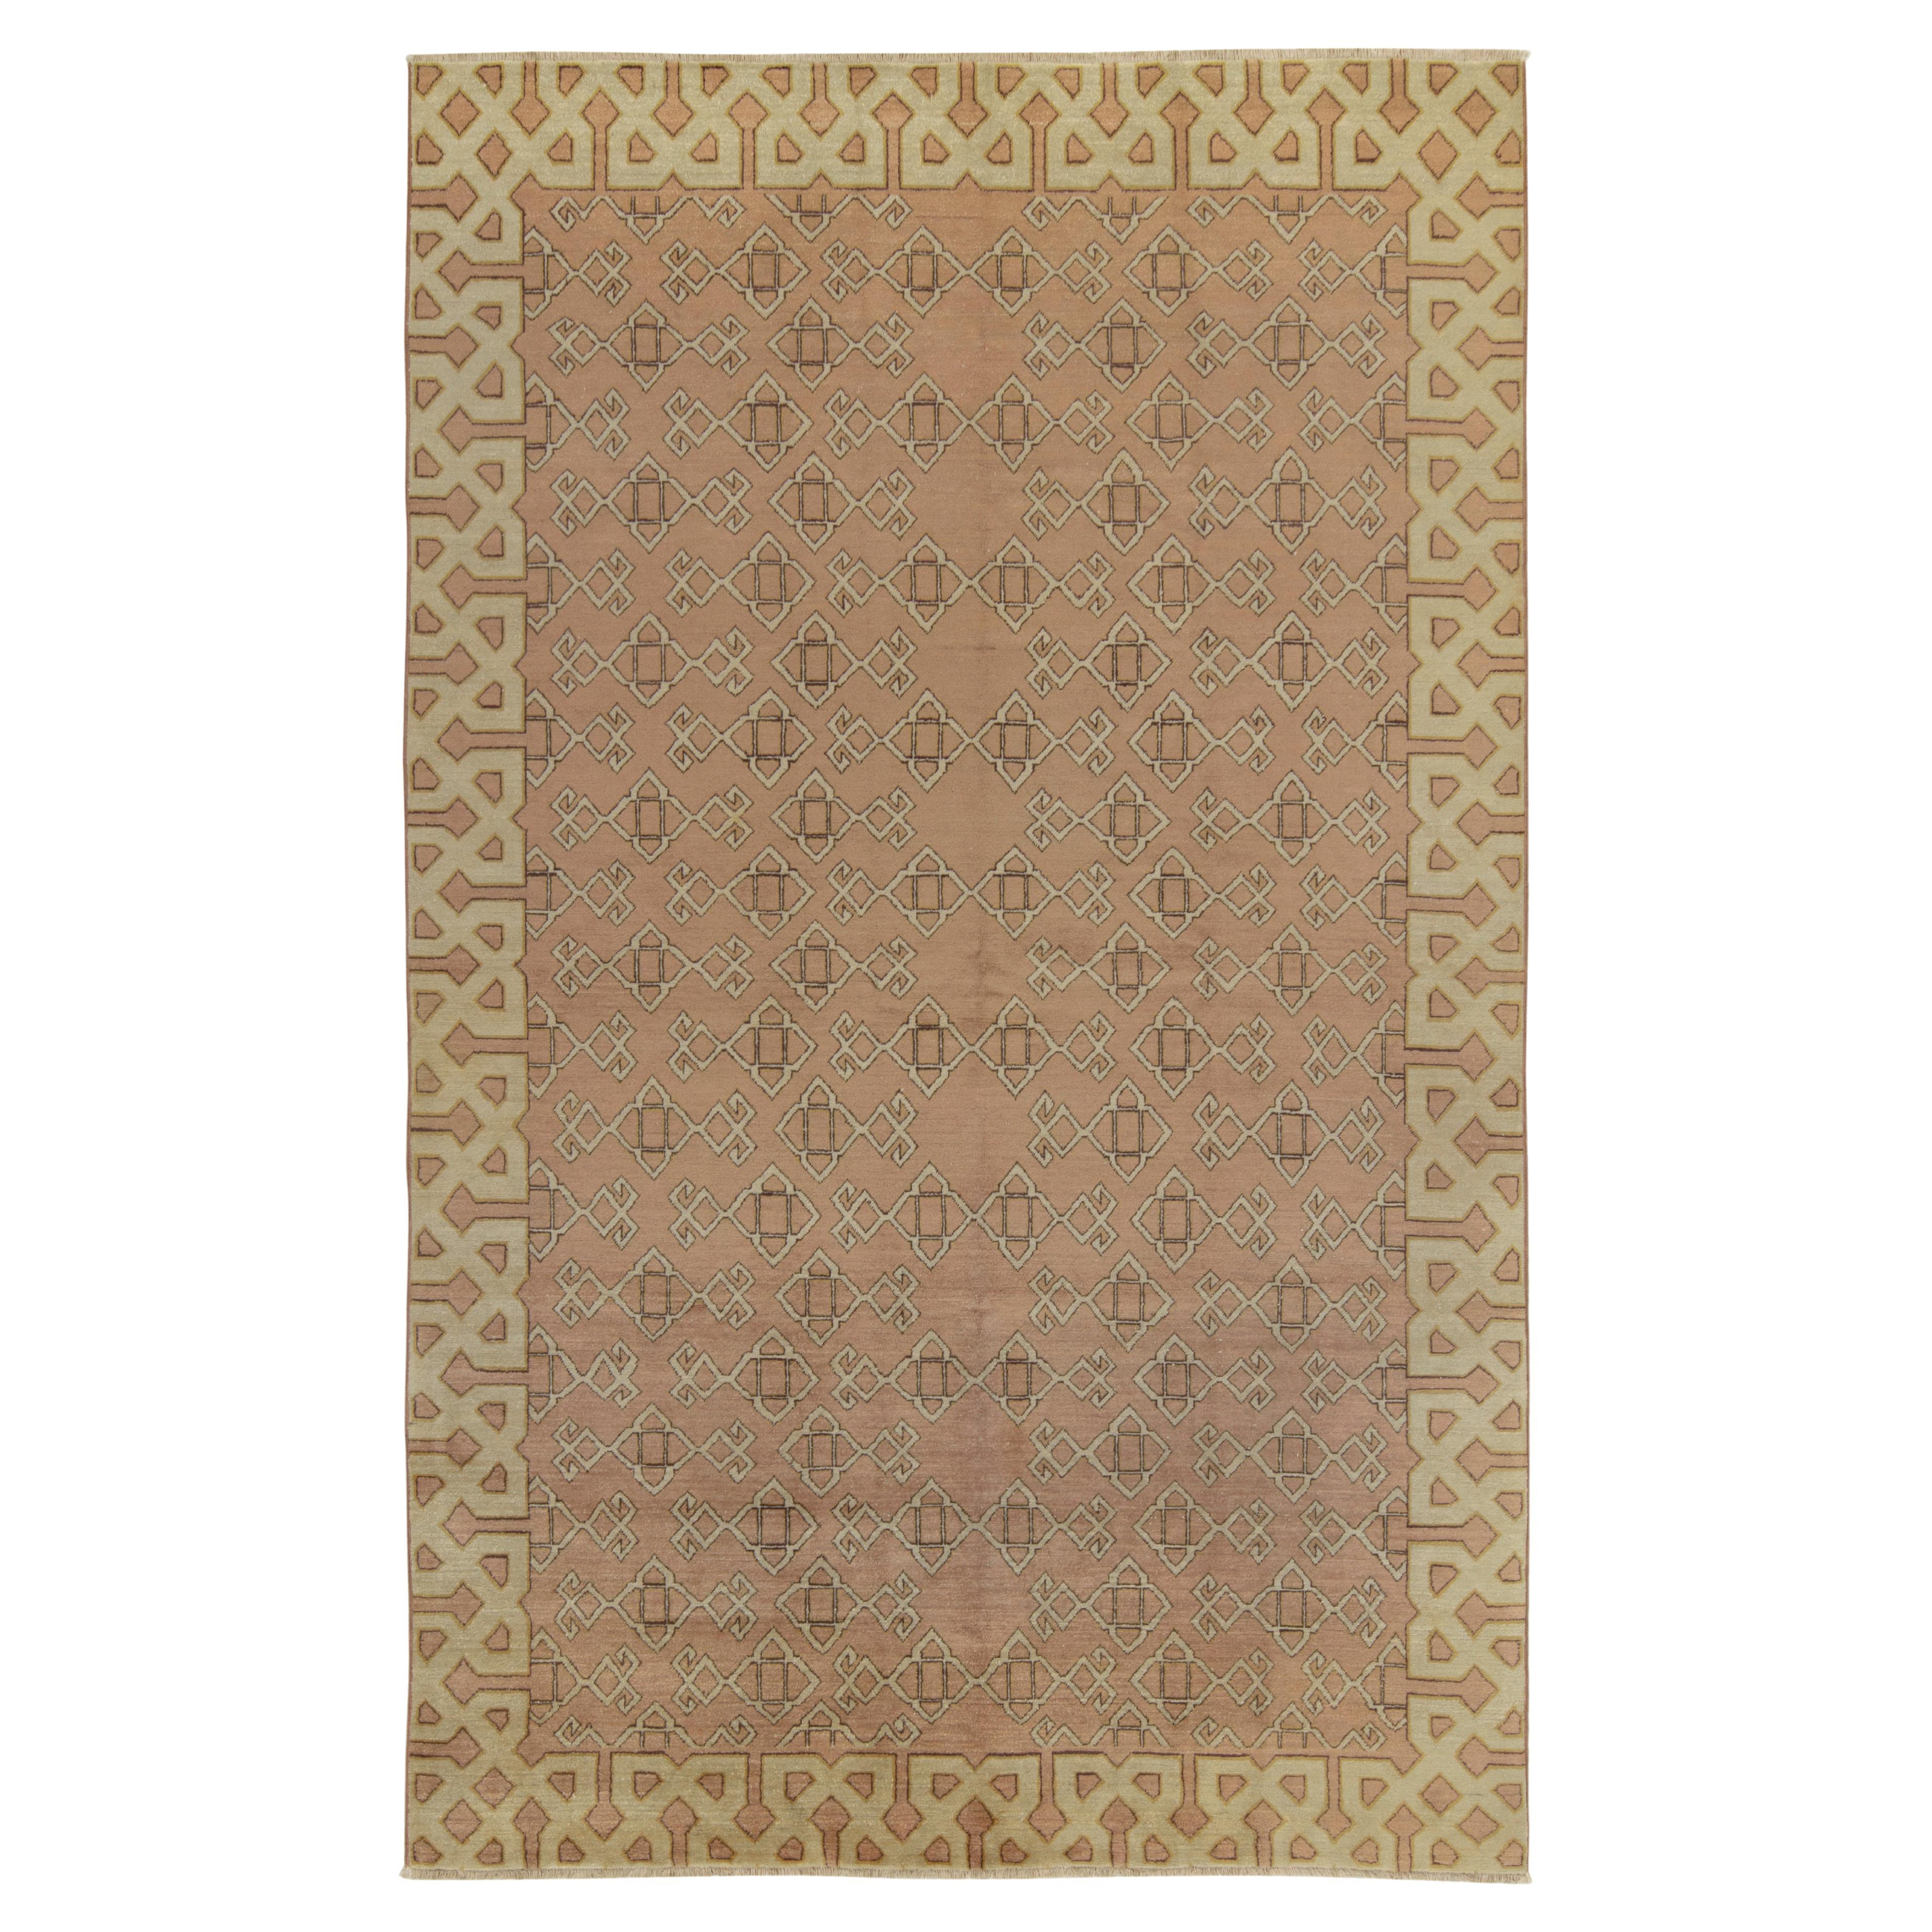 1960s Hand-Knotted Vintage Rug in Beige-Brown Geometric Pattern by Rug & Kilim